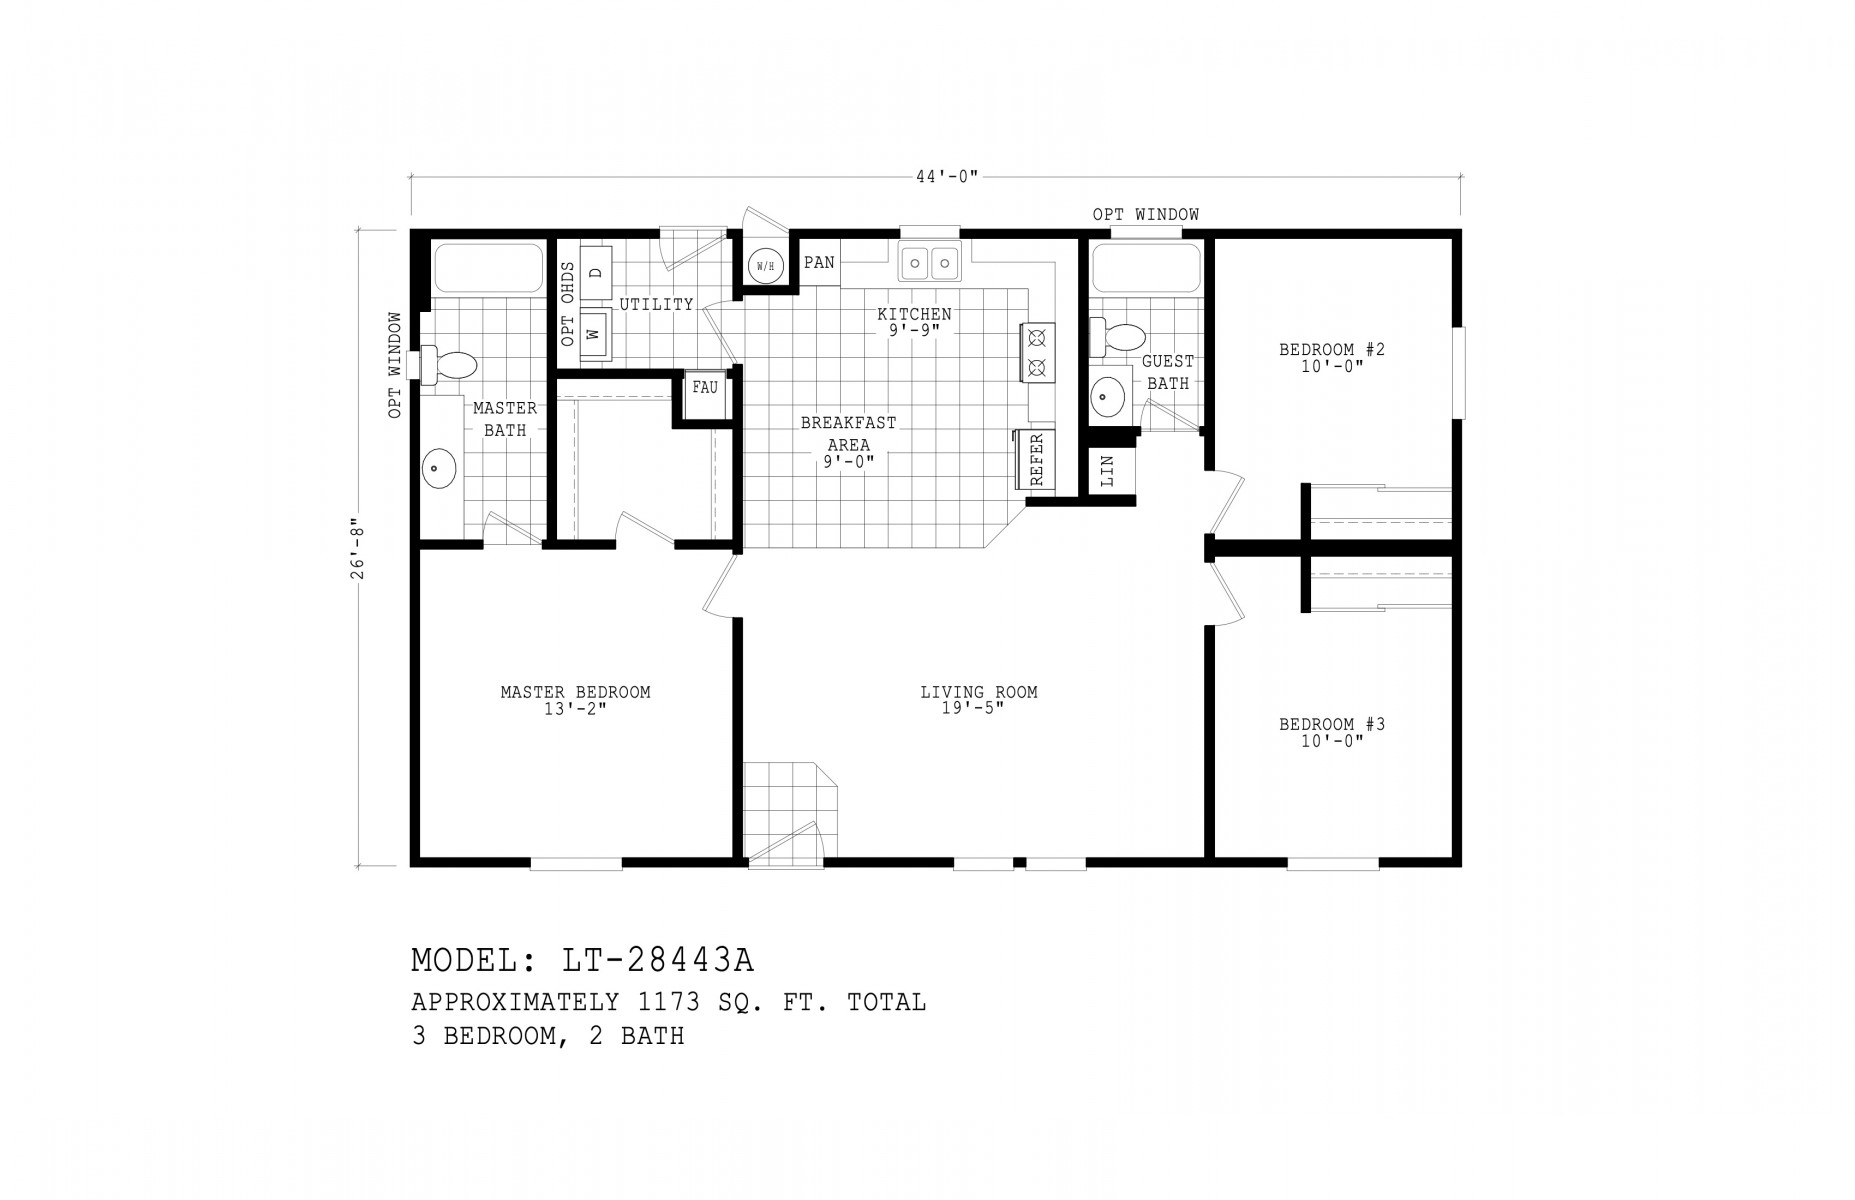 Homes Direct Modular Homes - Model LT28443A - Floorplan